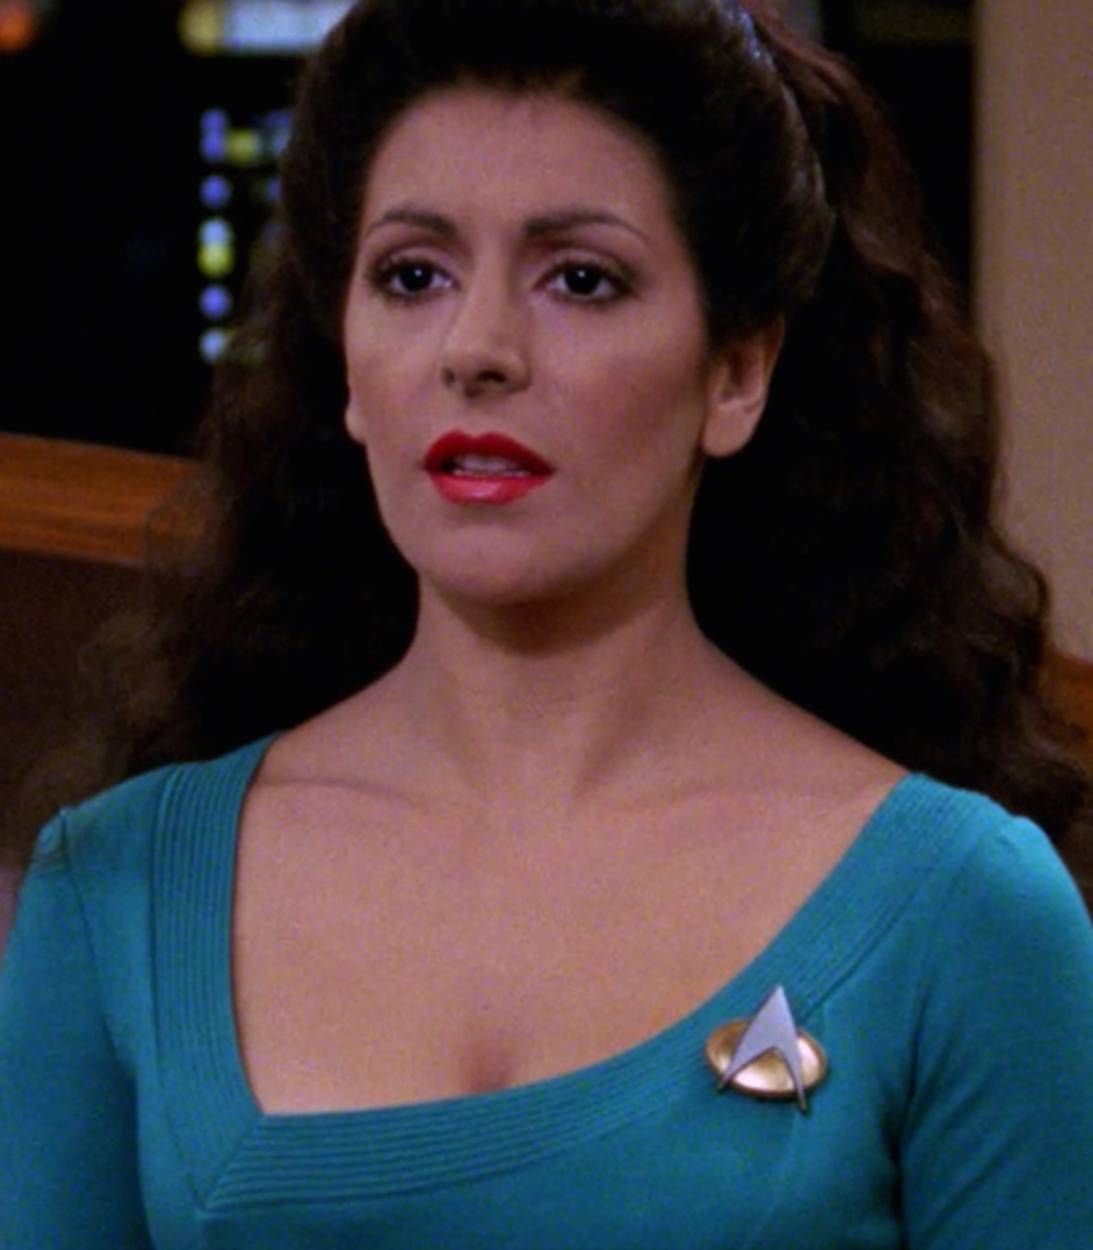 Deanna Troi in Star Trek The Next Generation pic vertical